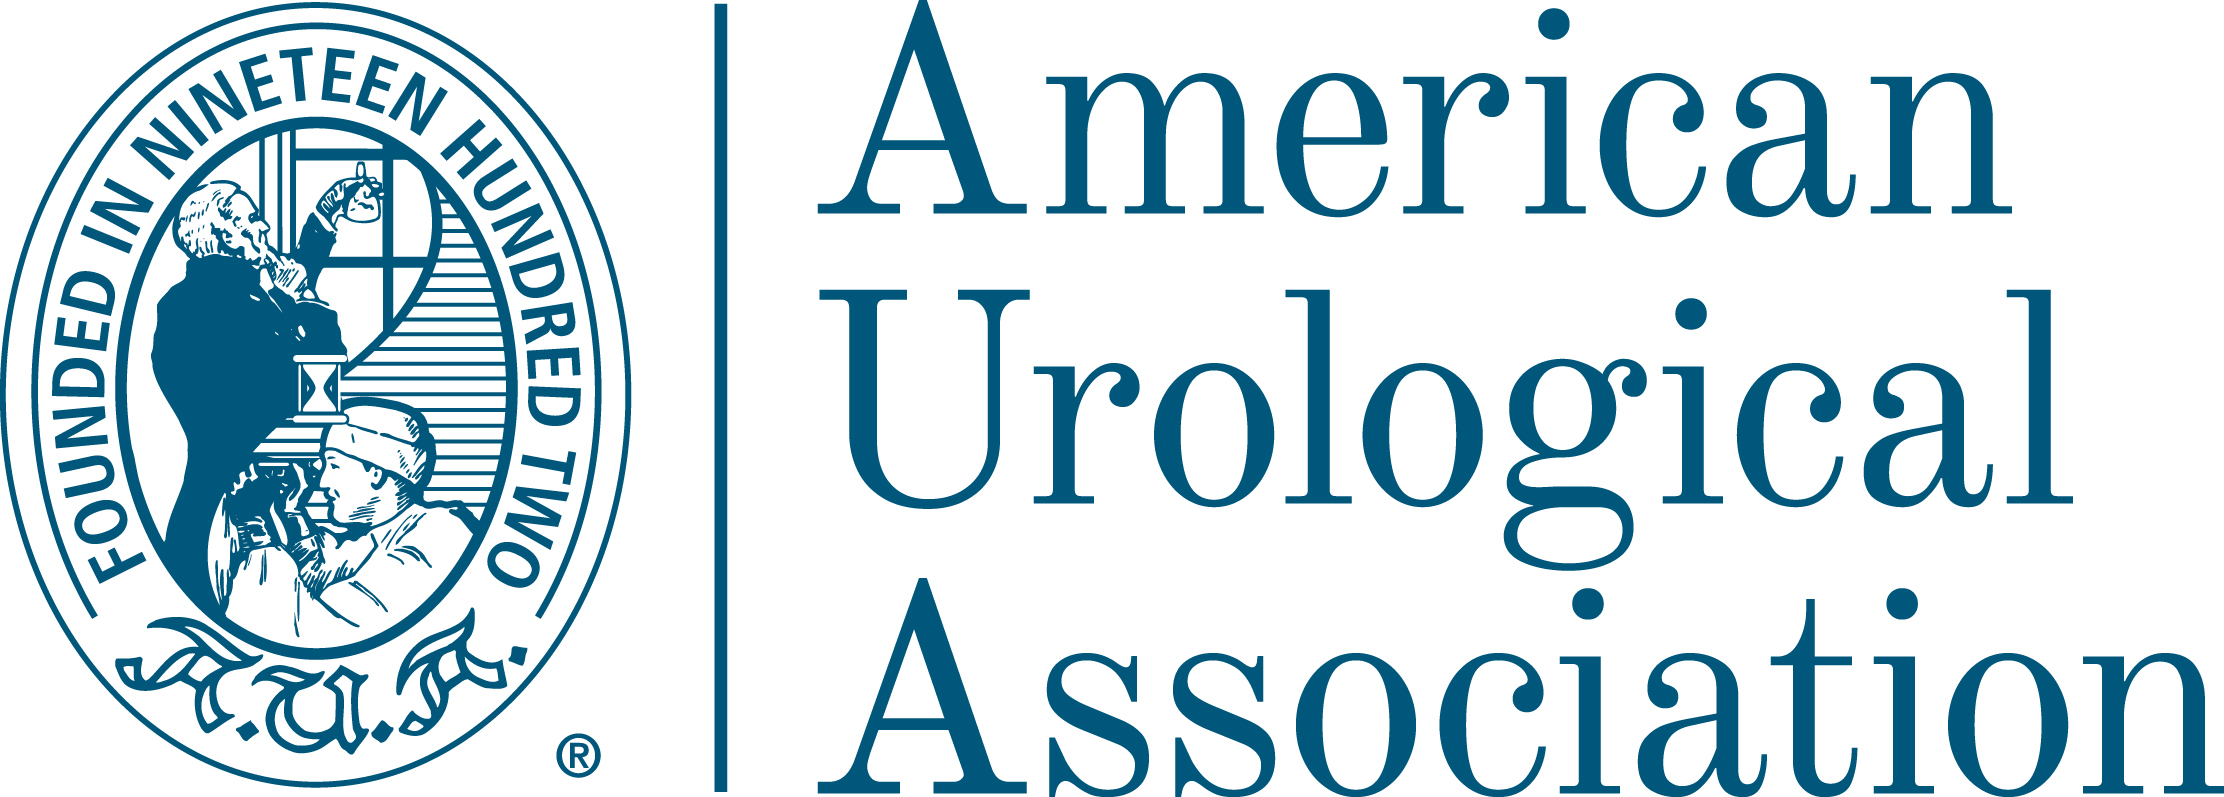 The American Urologi